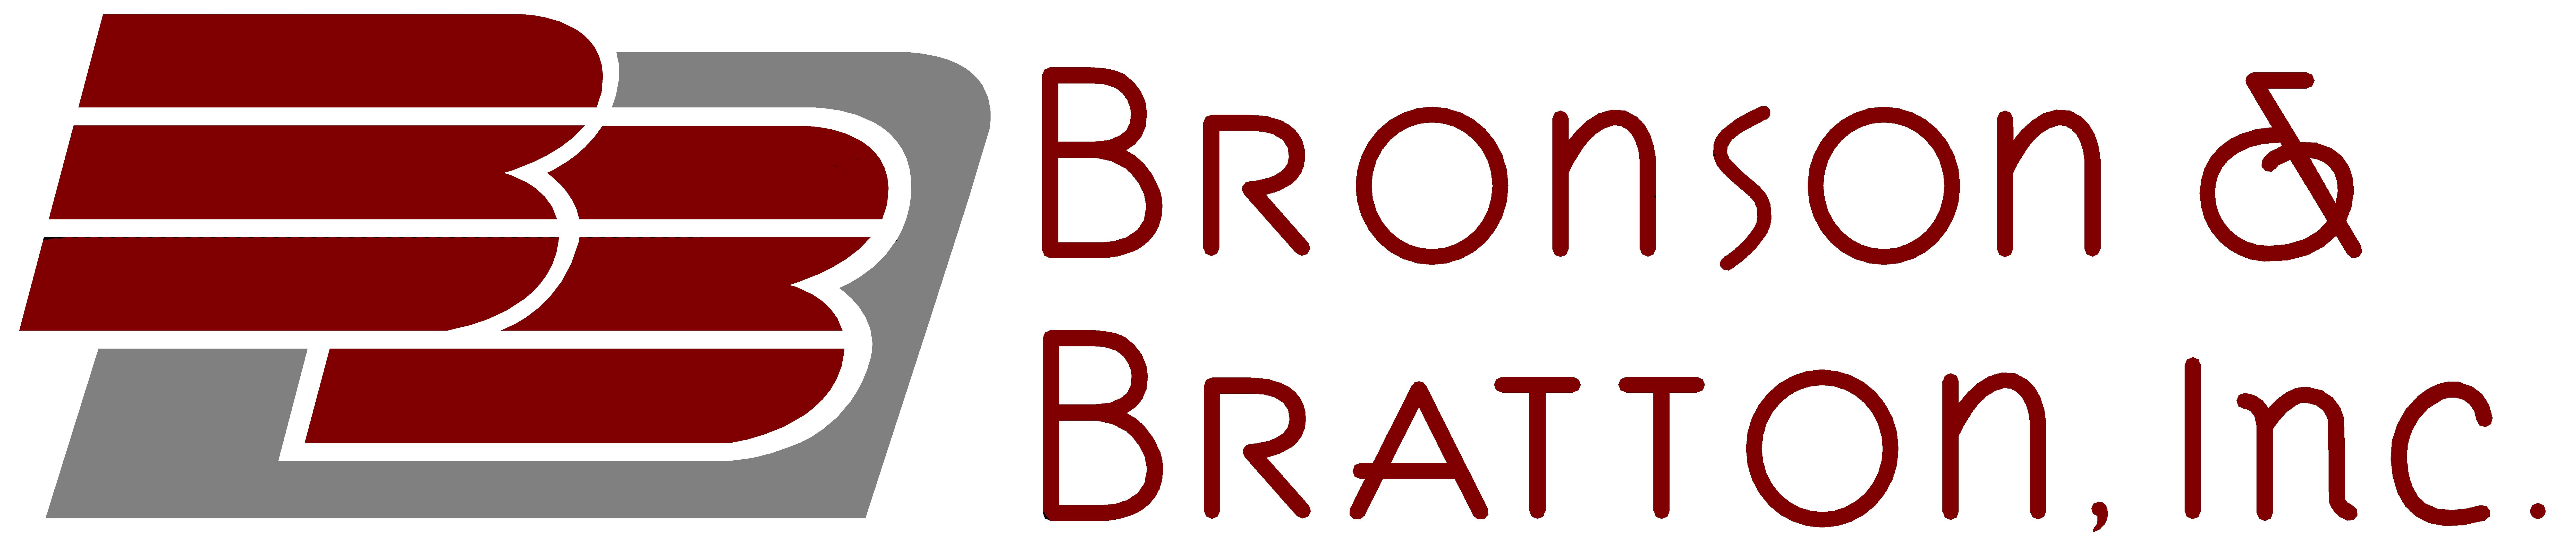 Bronson & Bratton Logo